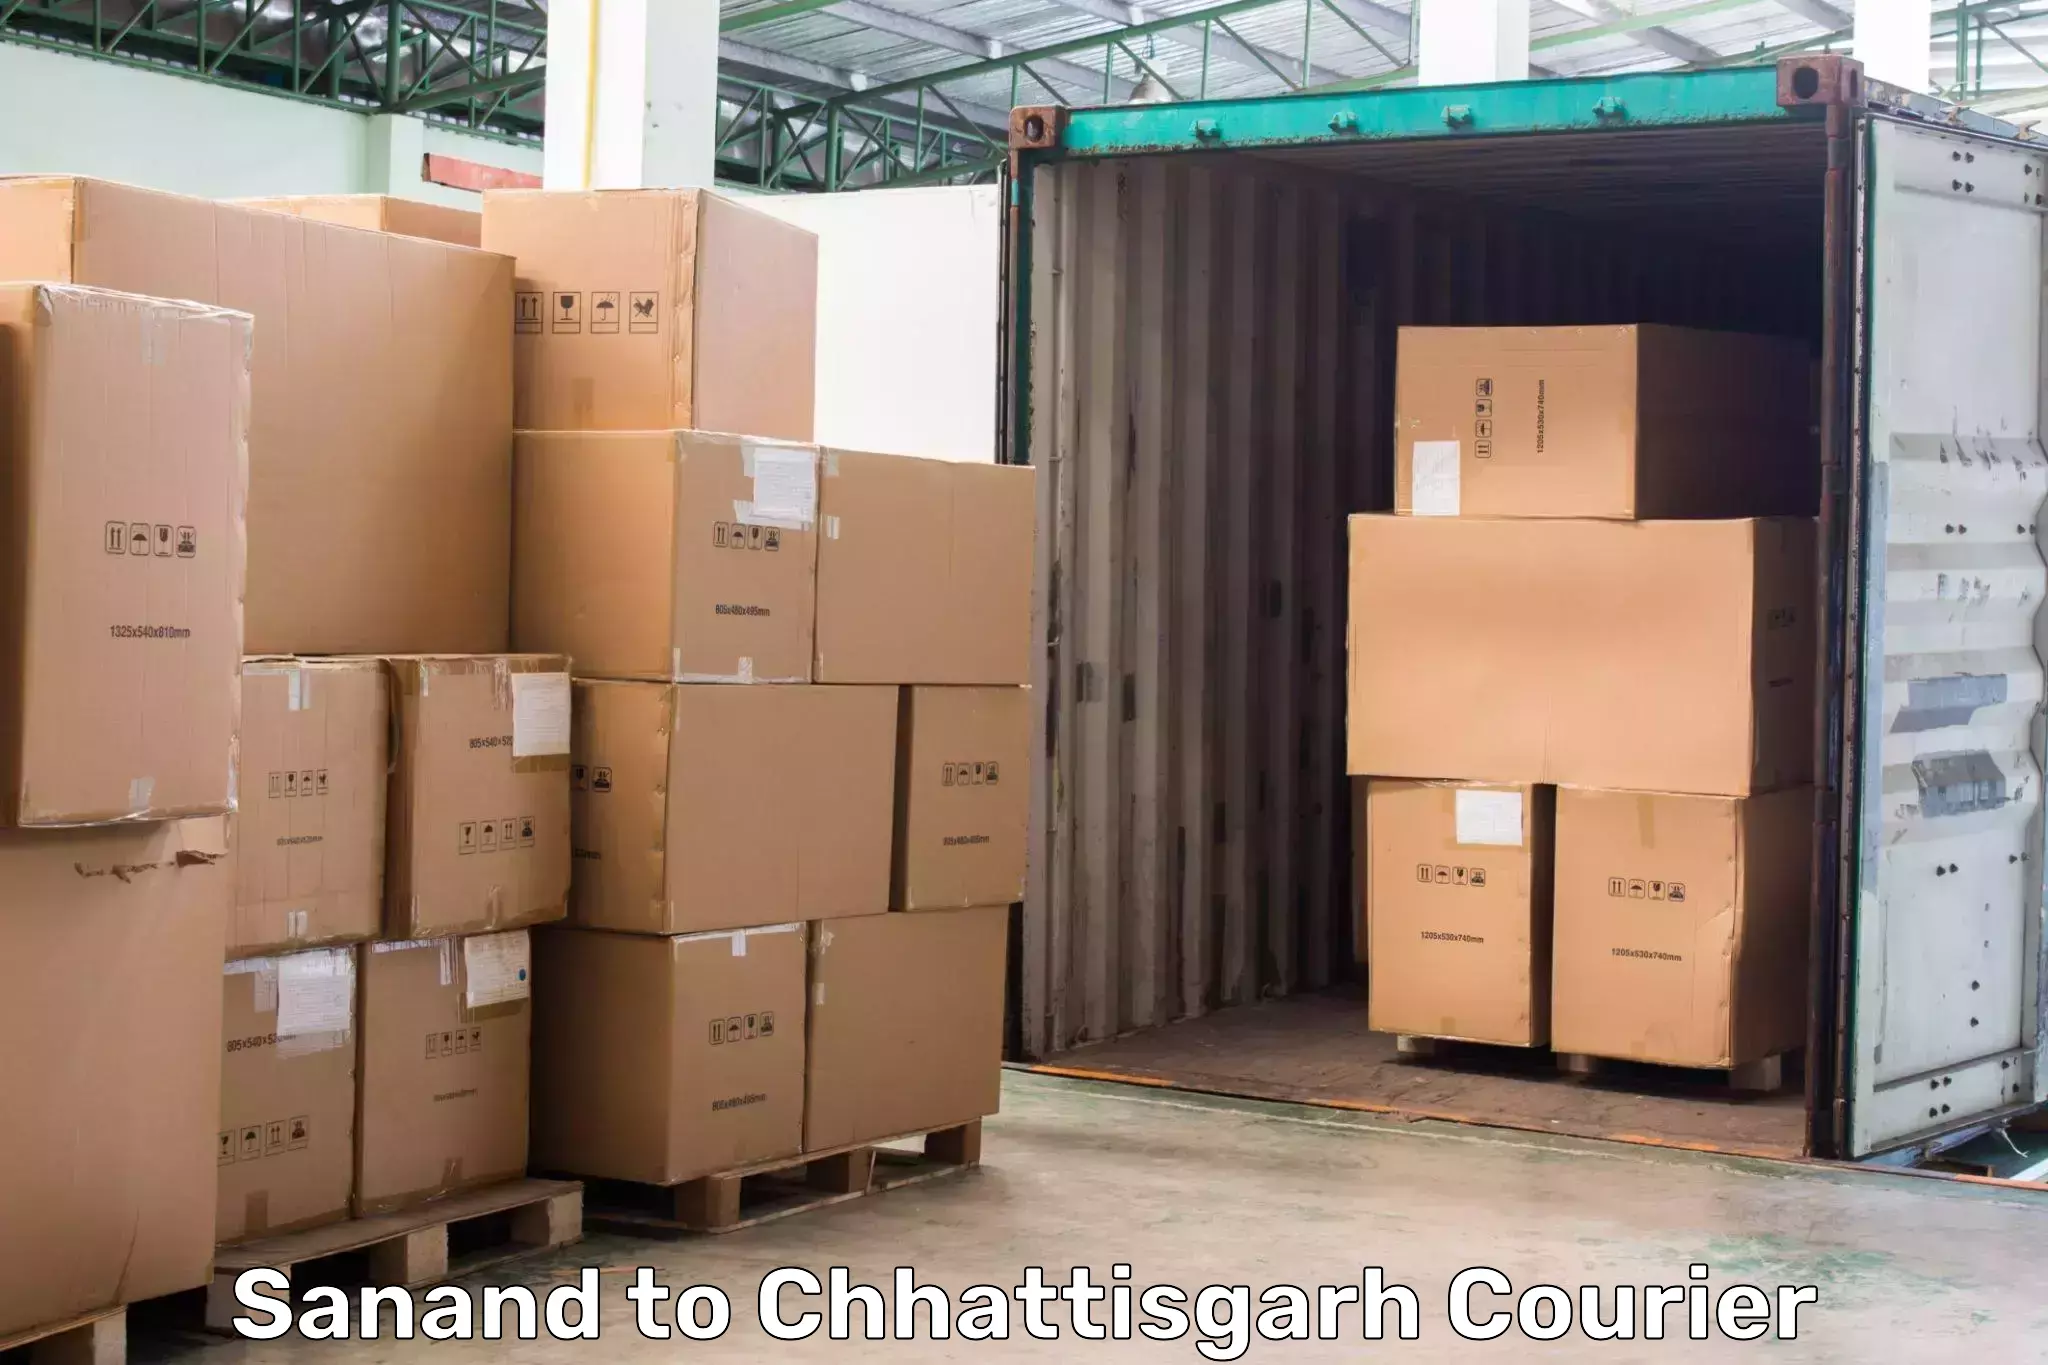 State-of-the-art courier technology Sanand to Korea Chhattisgarh